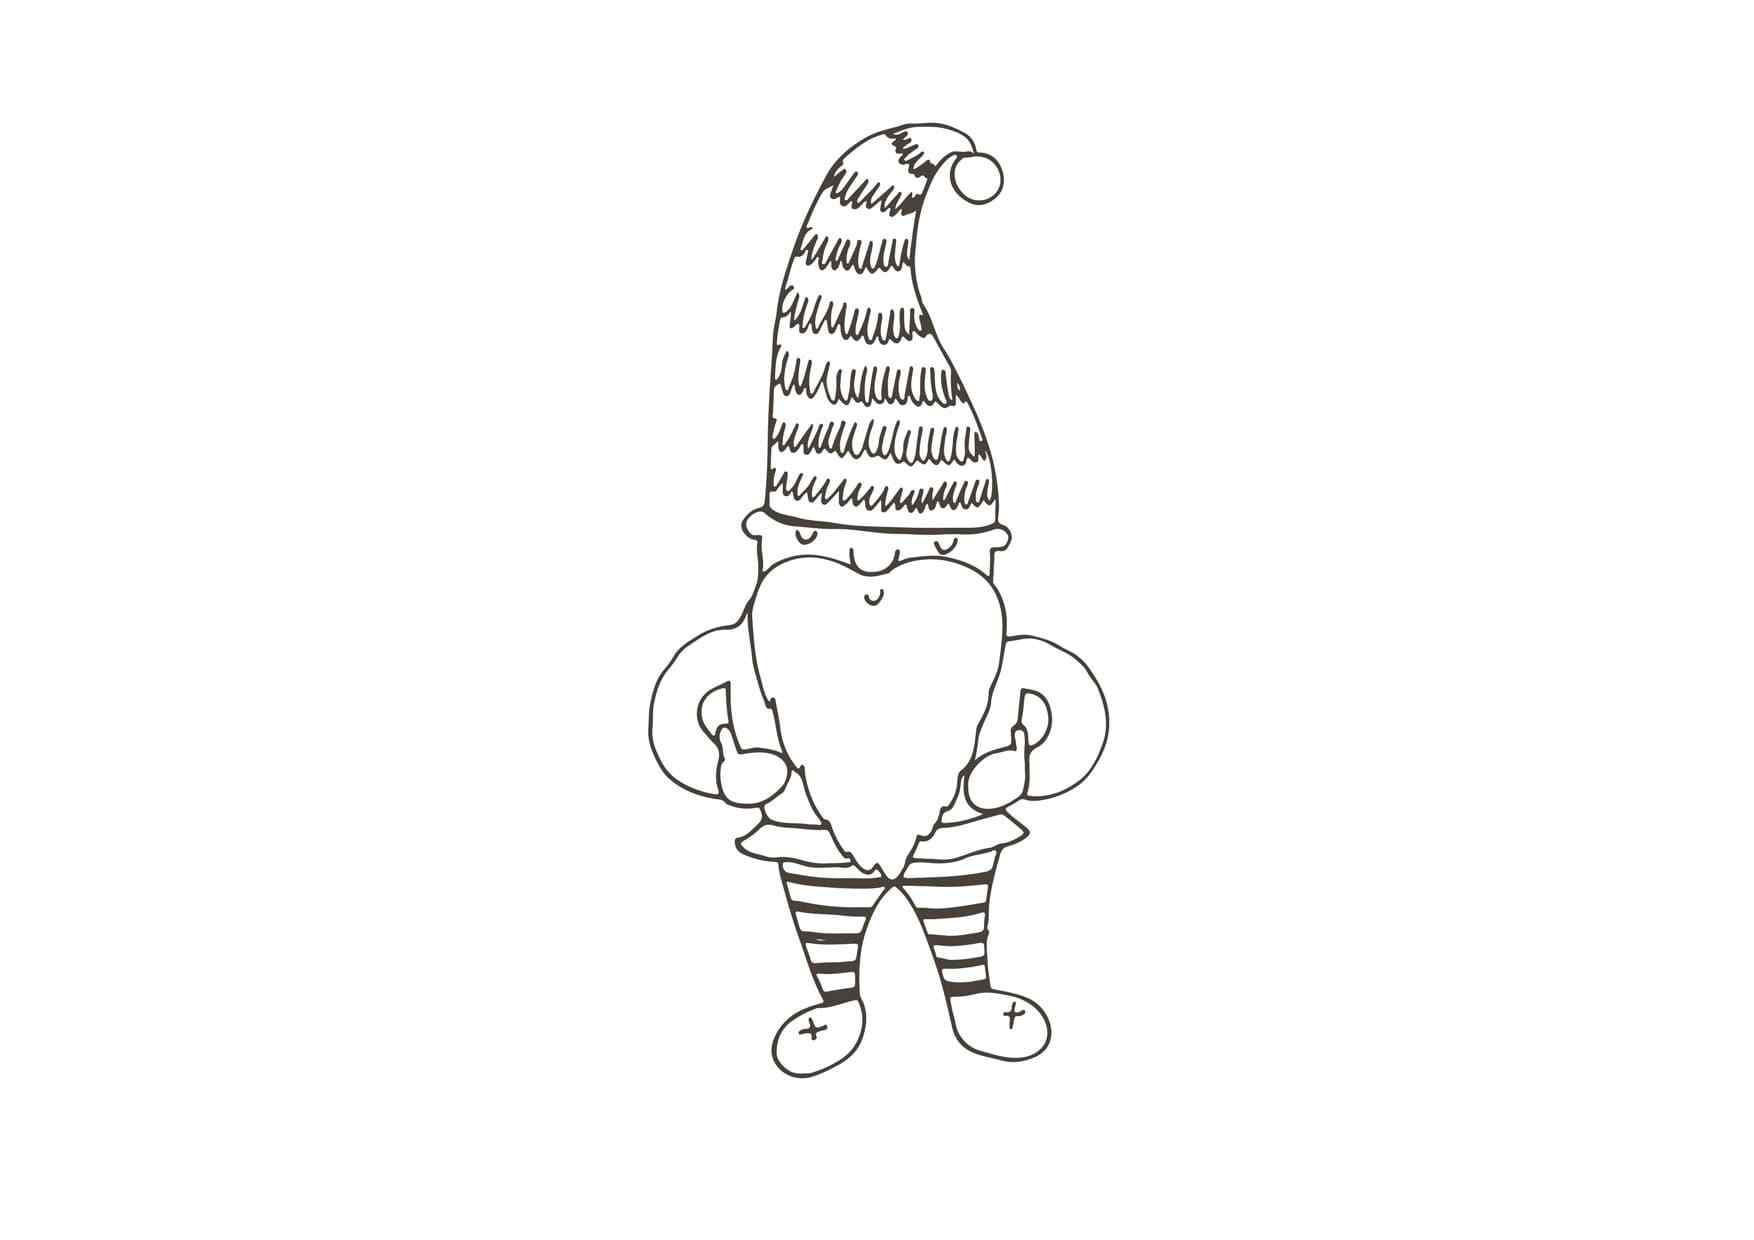 The Christmas Gnome